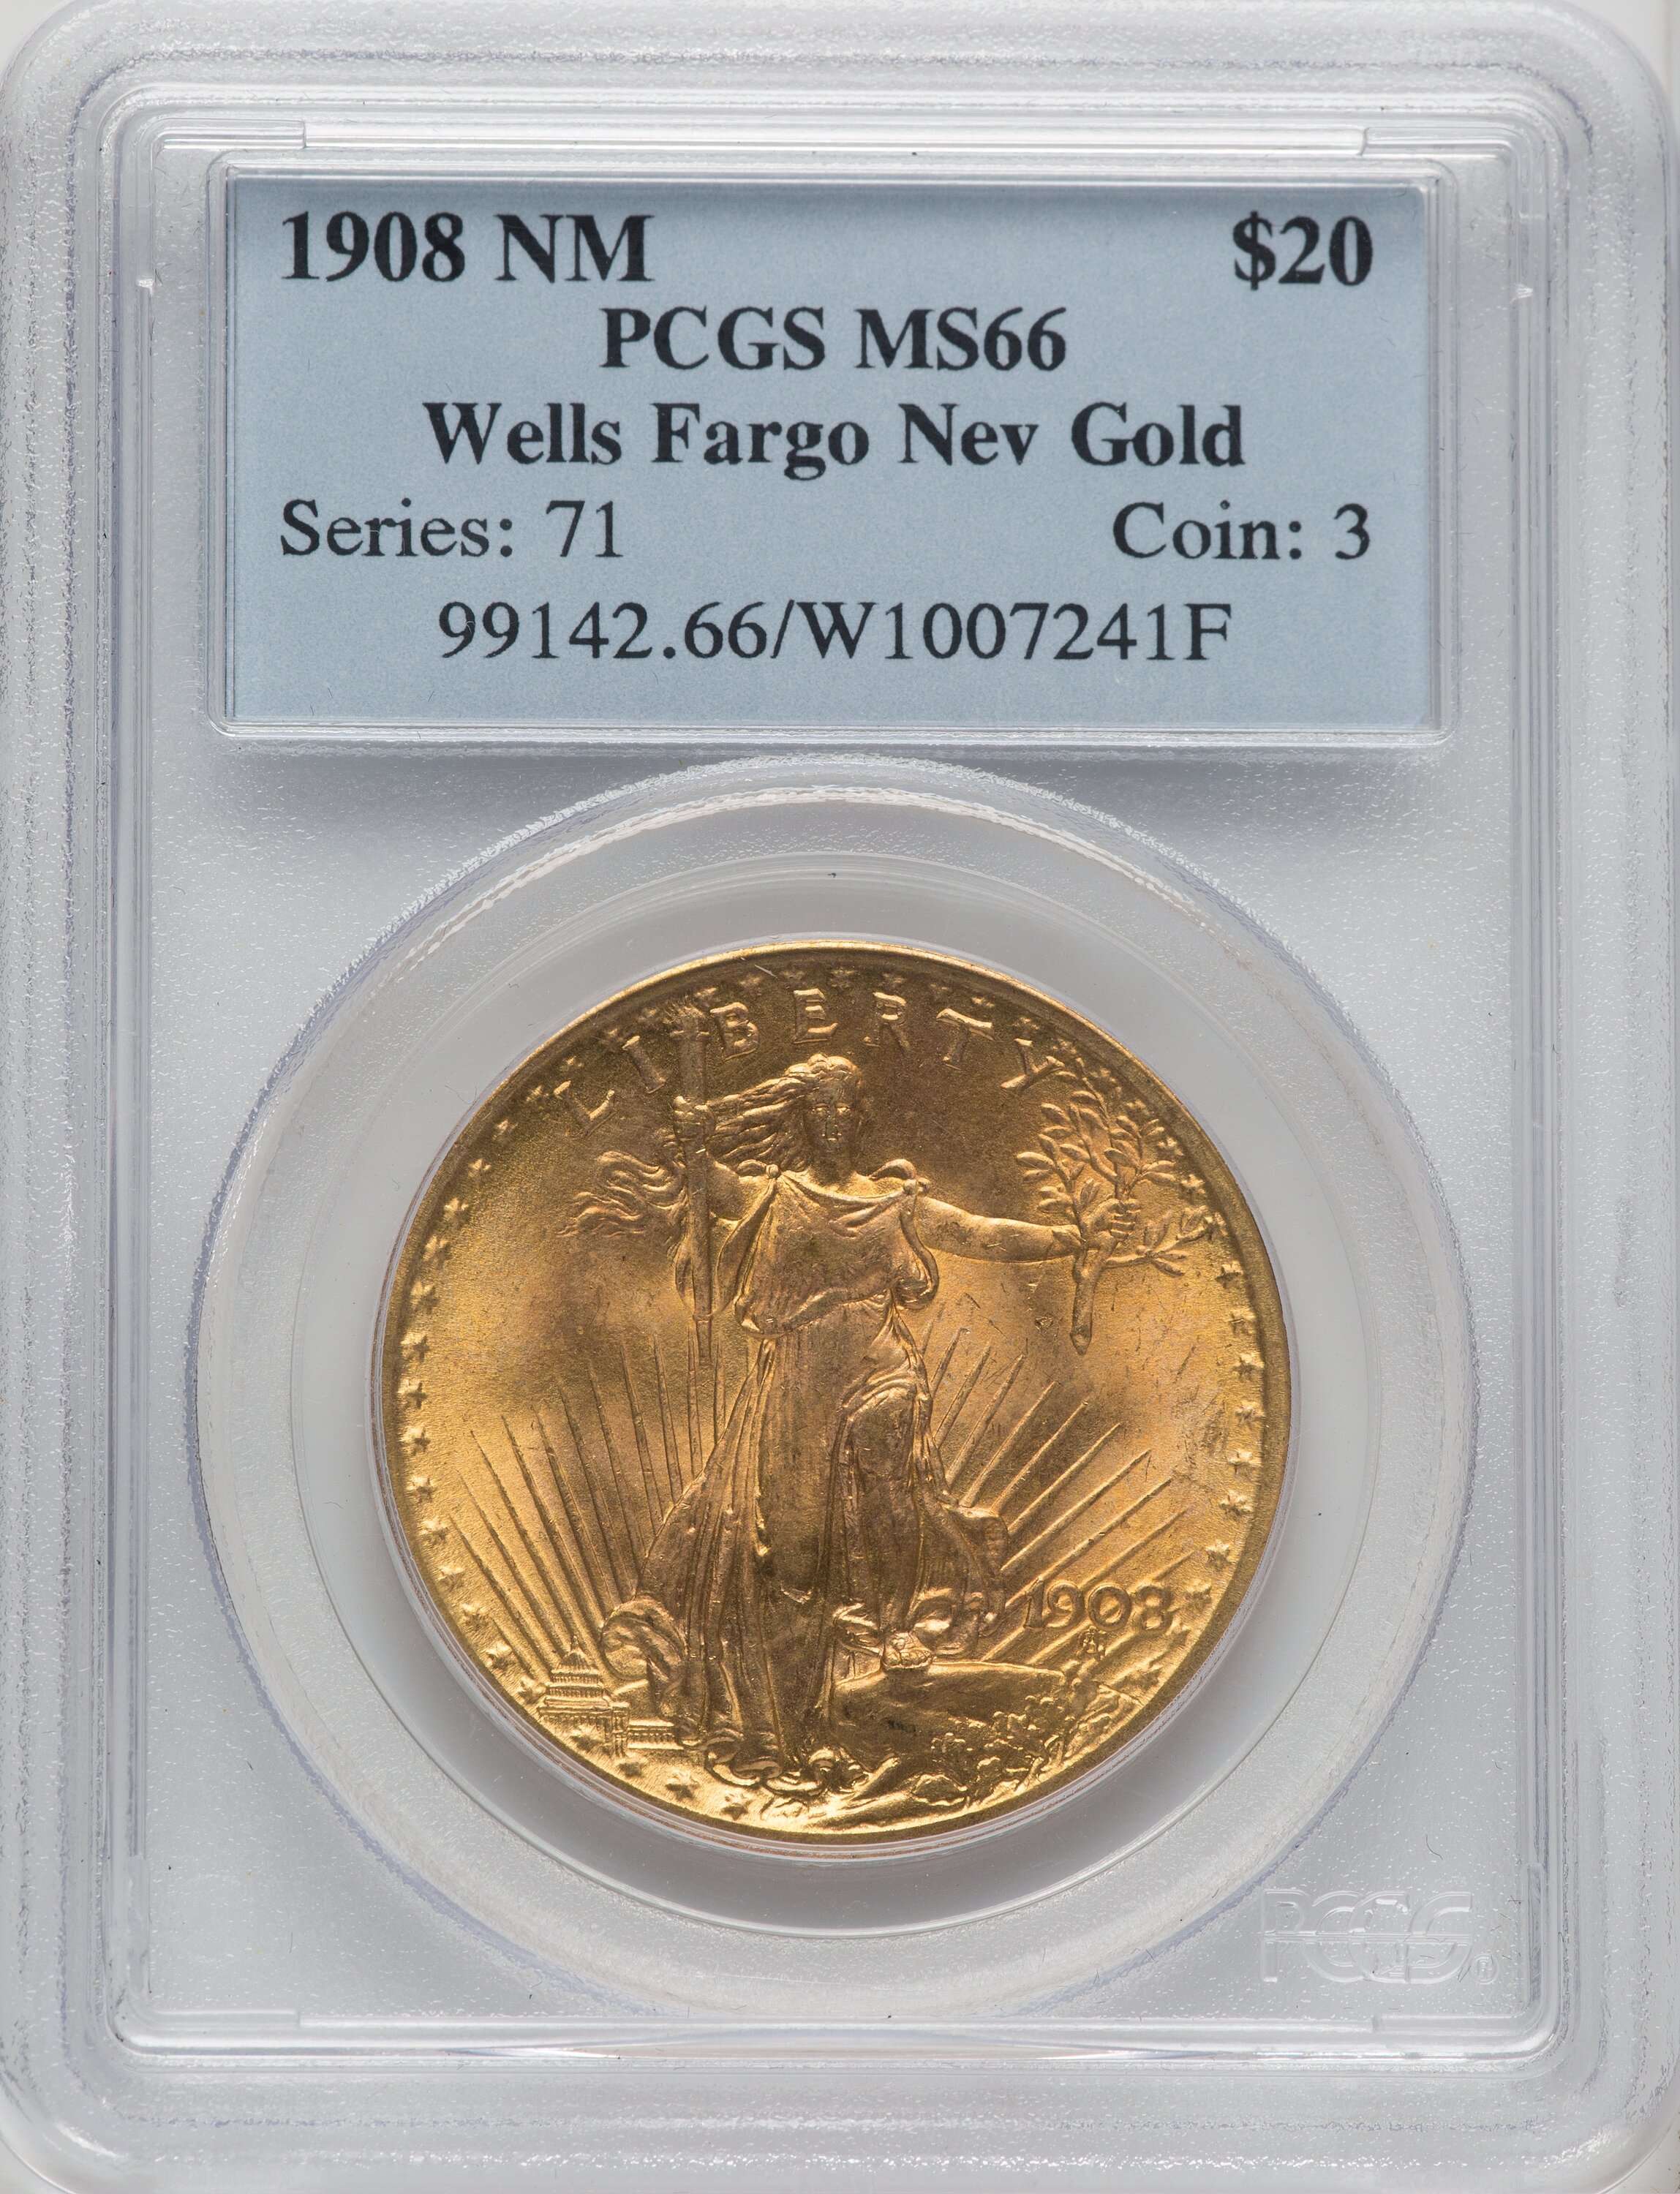 1908 NM $20 Wells Fargo 66 PCGS